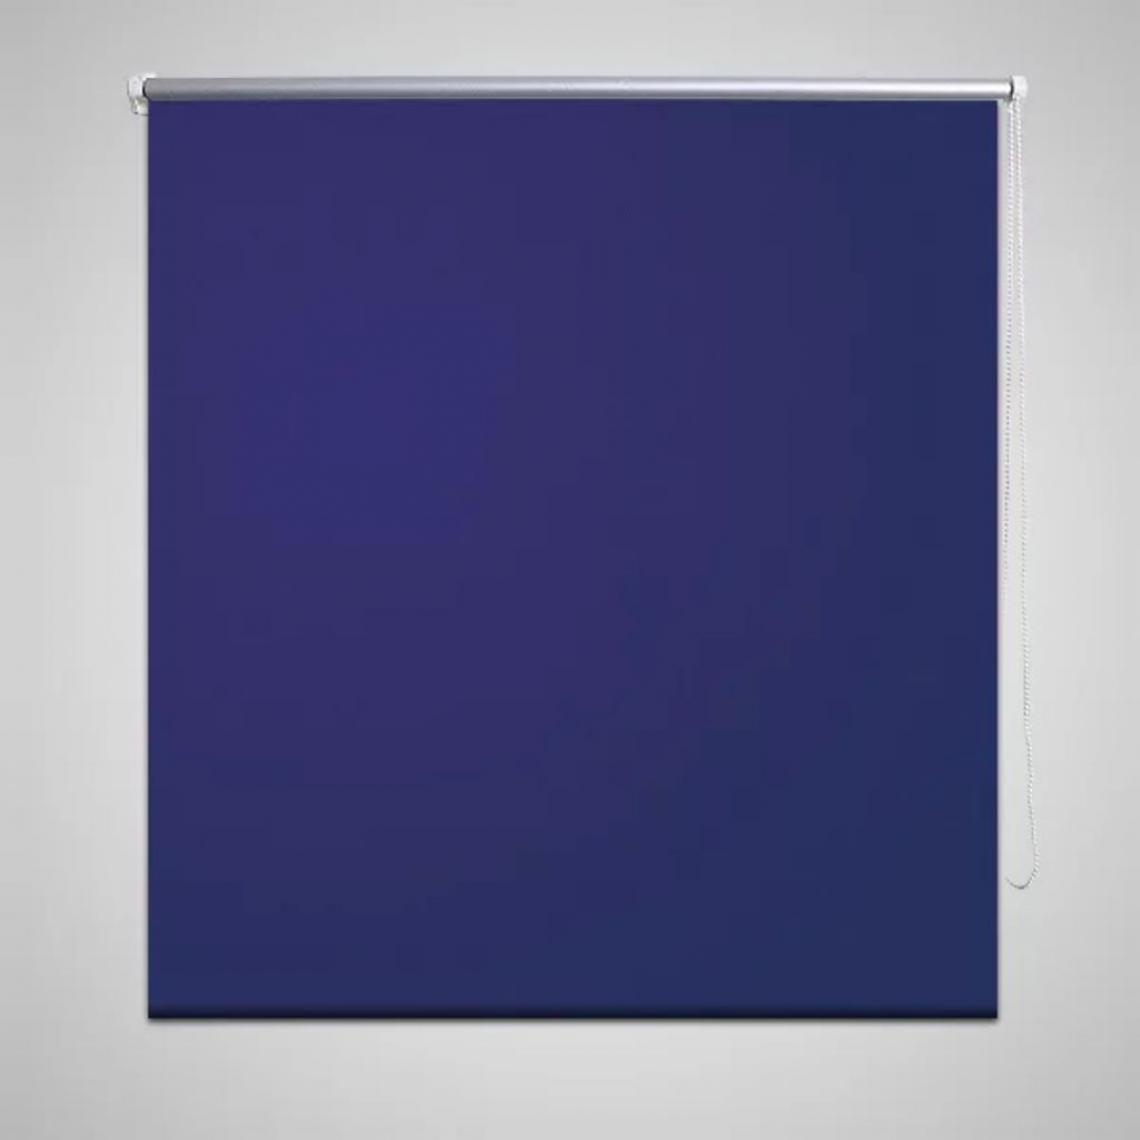 Chunhelife - Store enrouleur occultant 120 x 230 cm bleu - Store banne